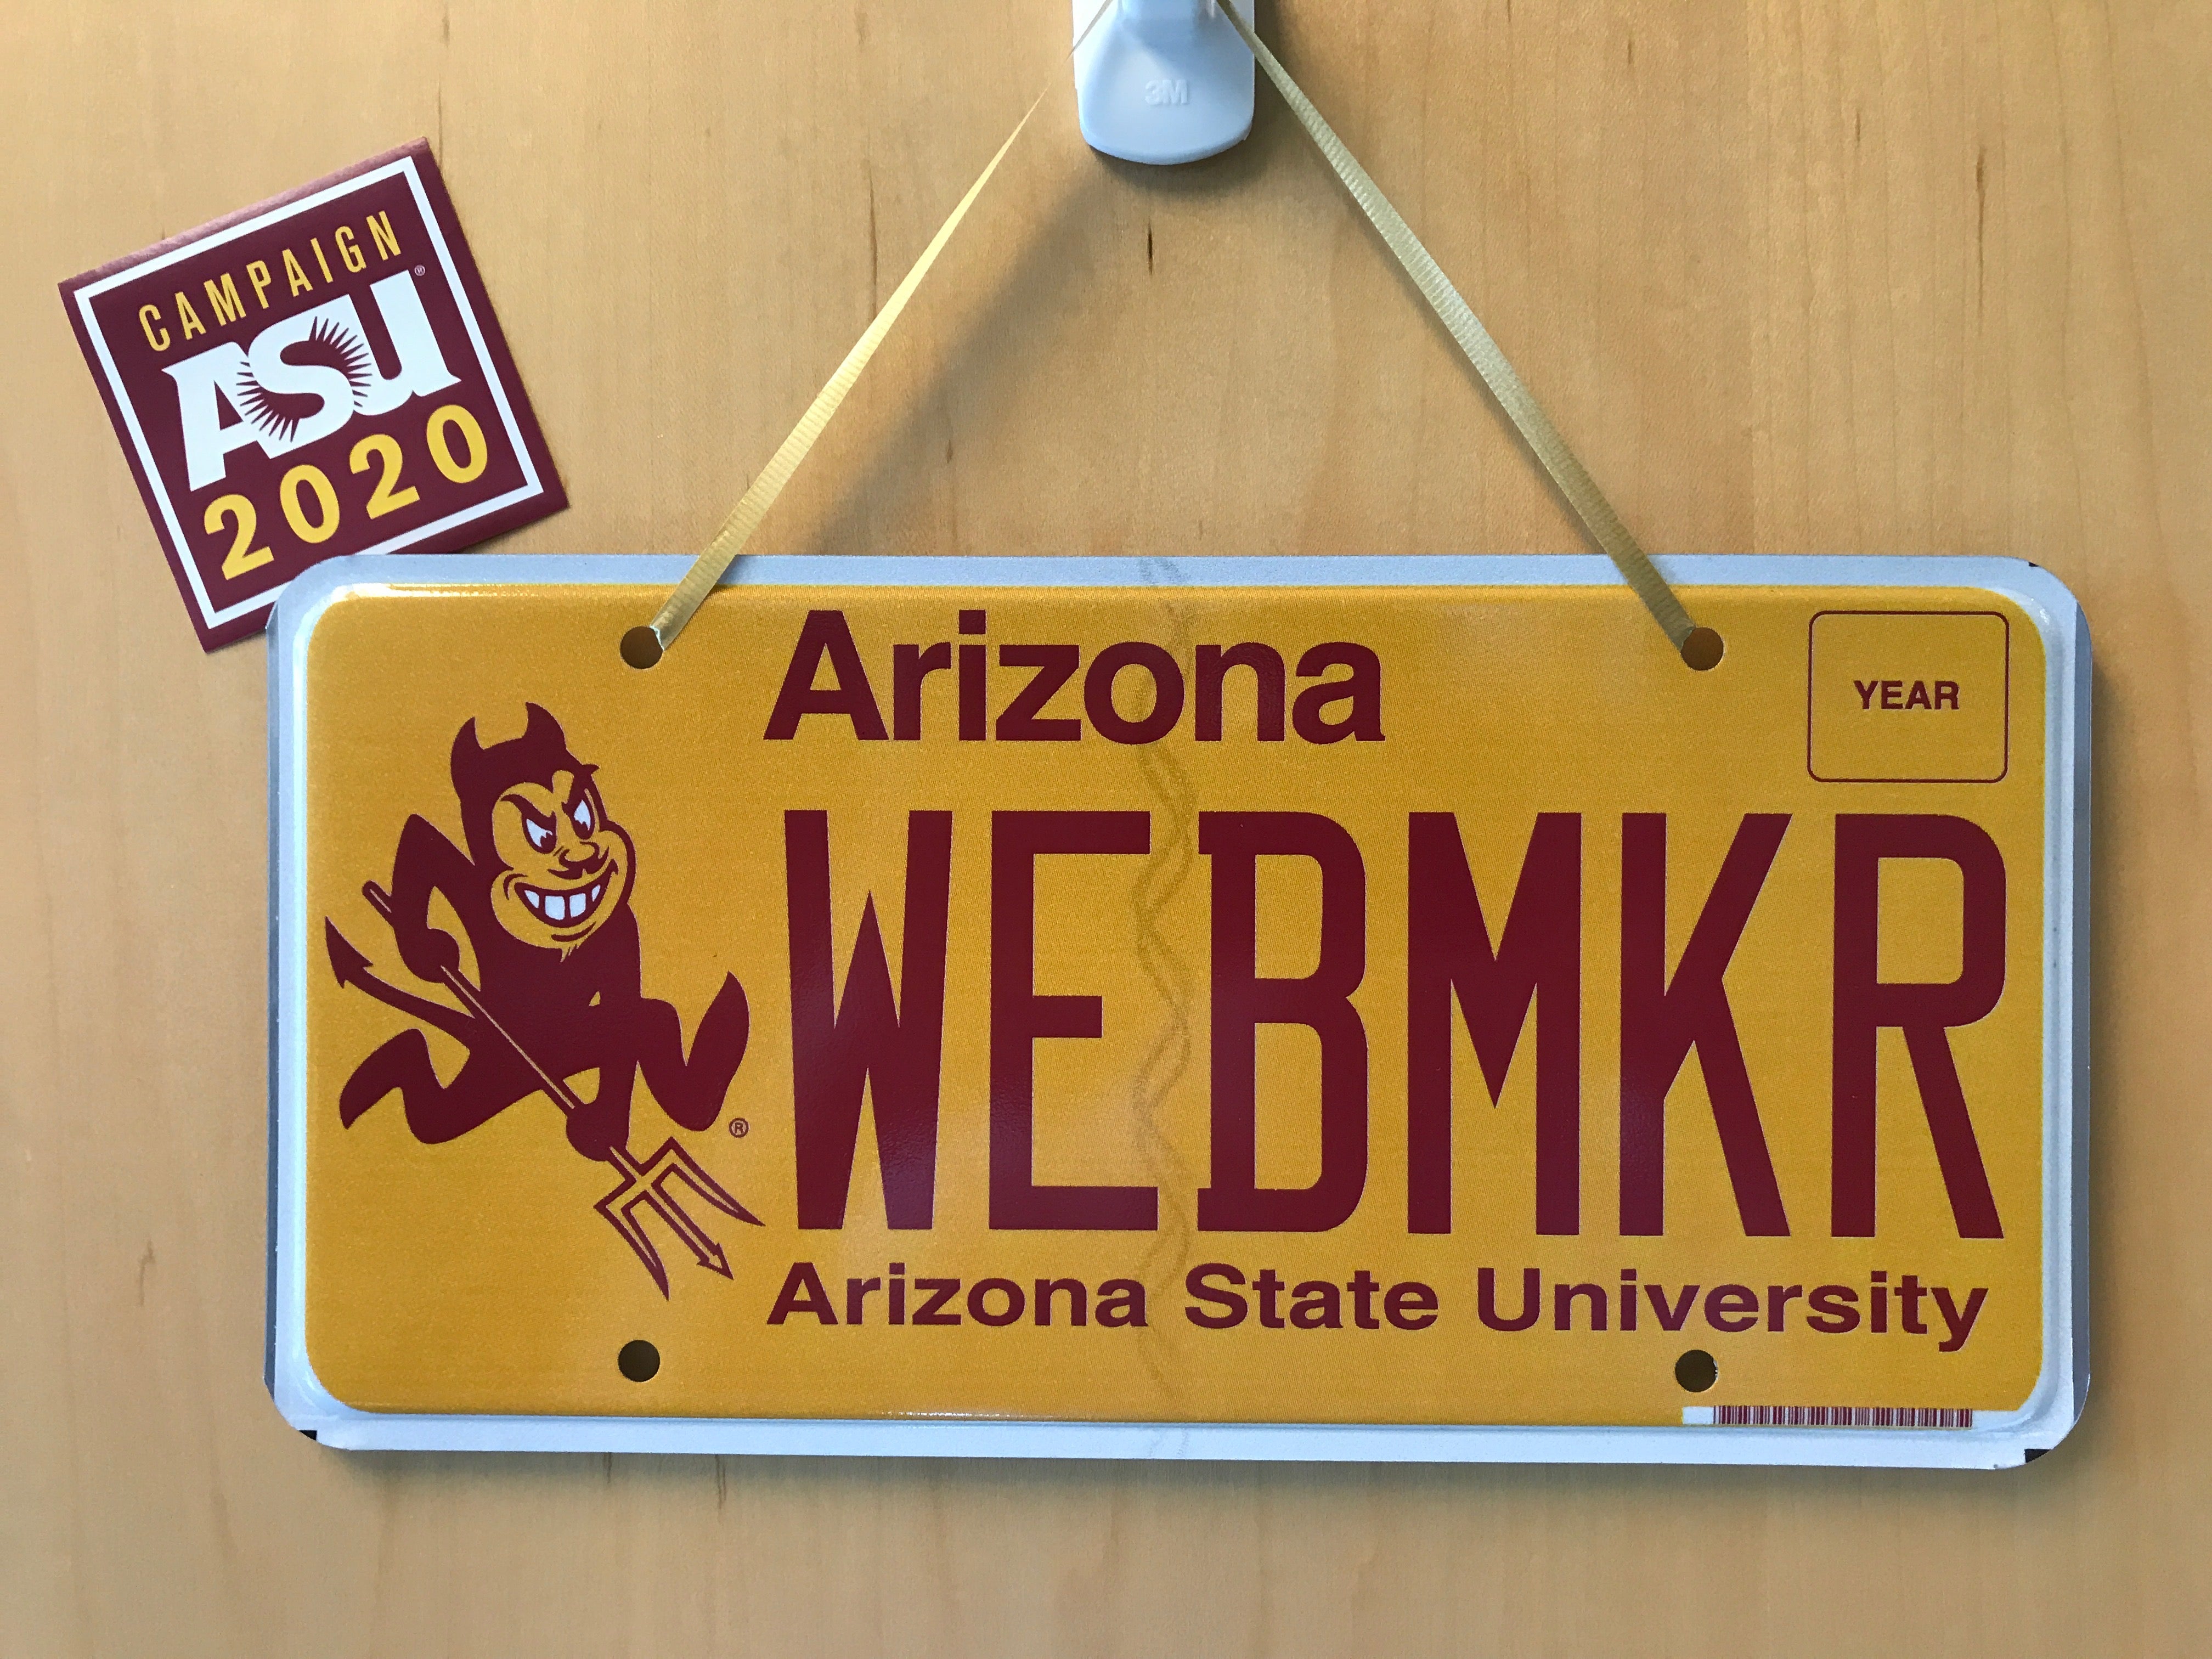 License Plate: WEBMKR